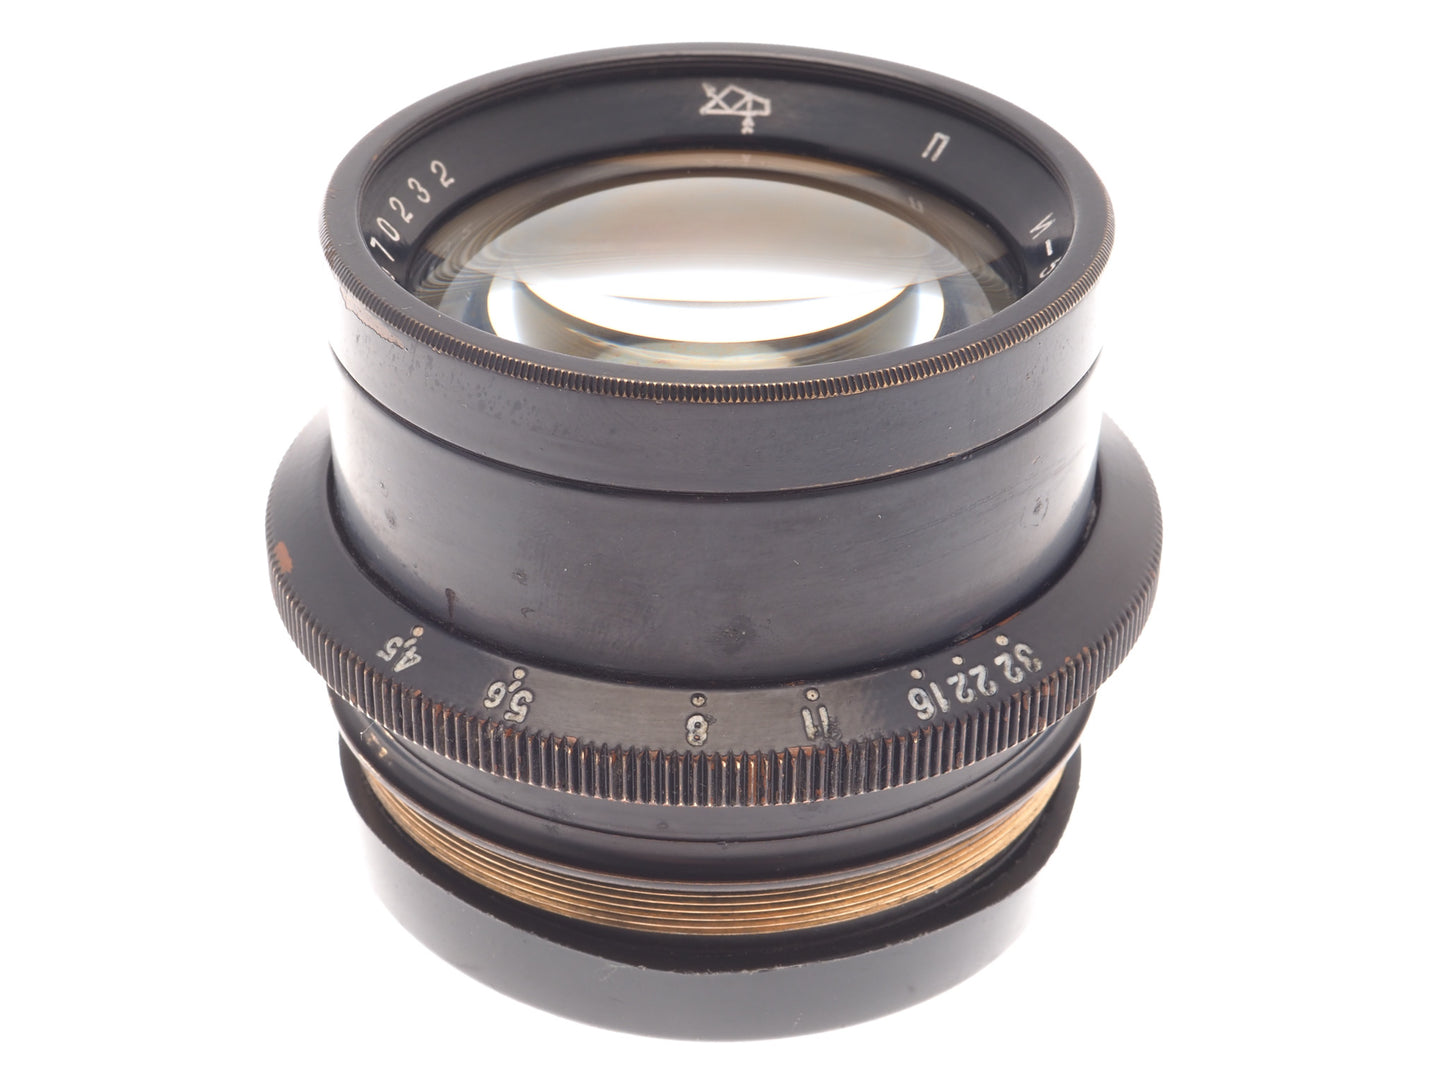 KOMZ 21cm f4.5 Industar-51 - Lens